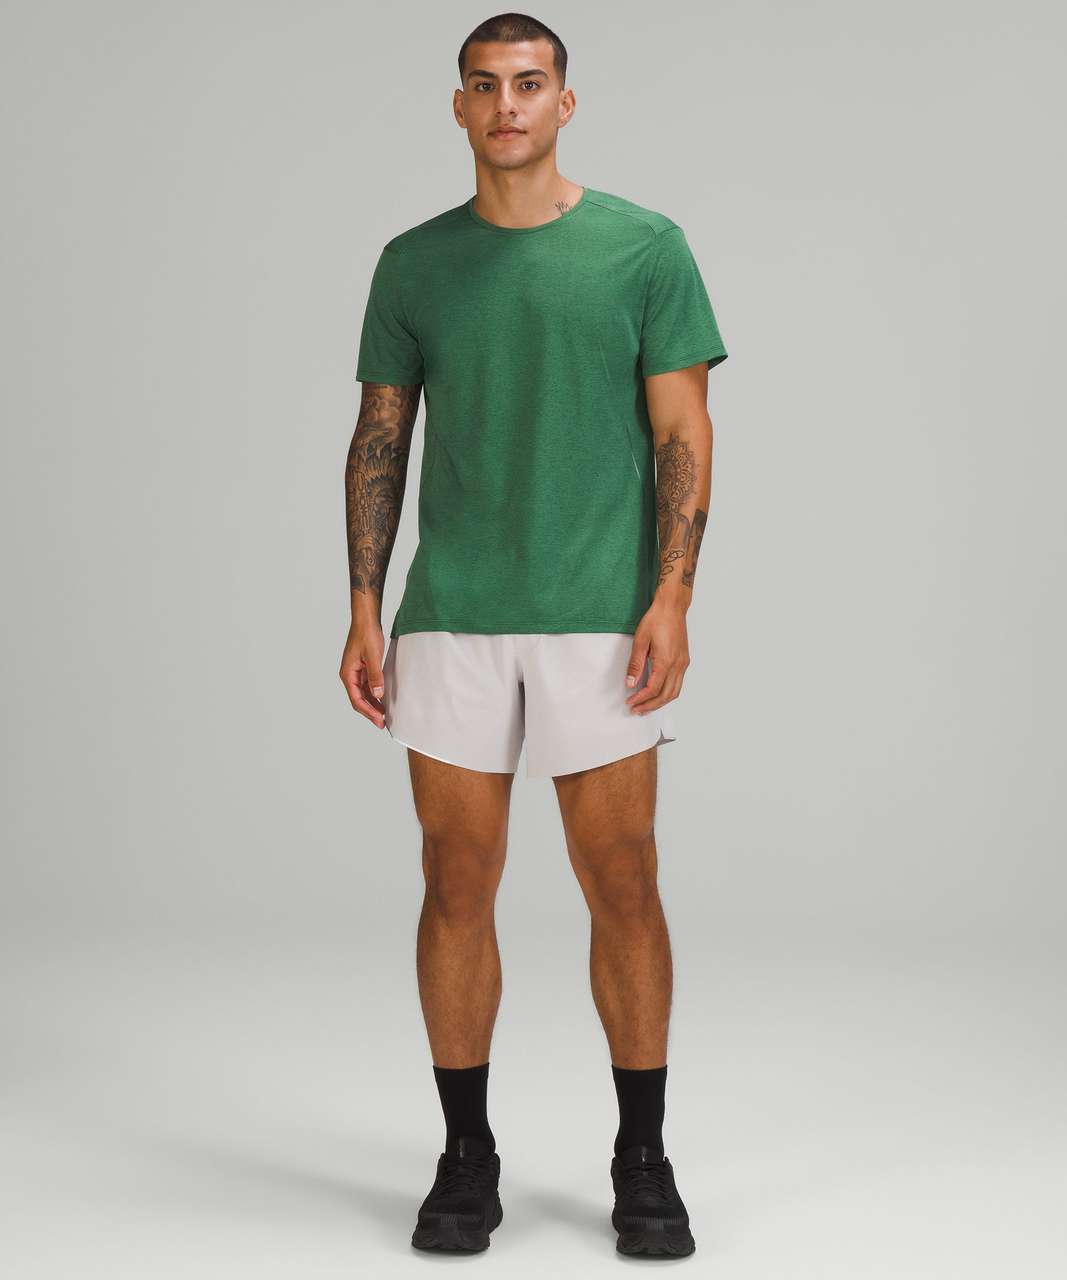 Lululemon Fast and Free Short Sleeve Shirt - Heathered Everglade Green